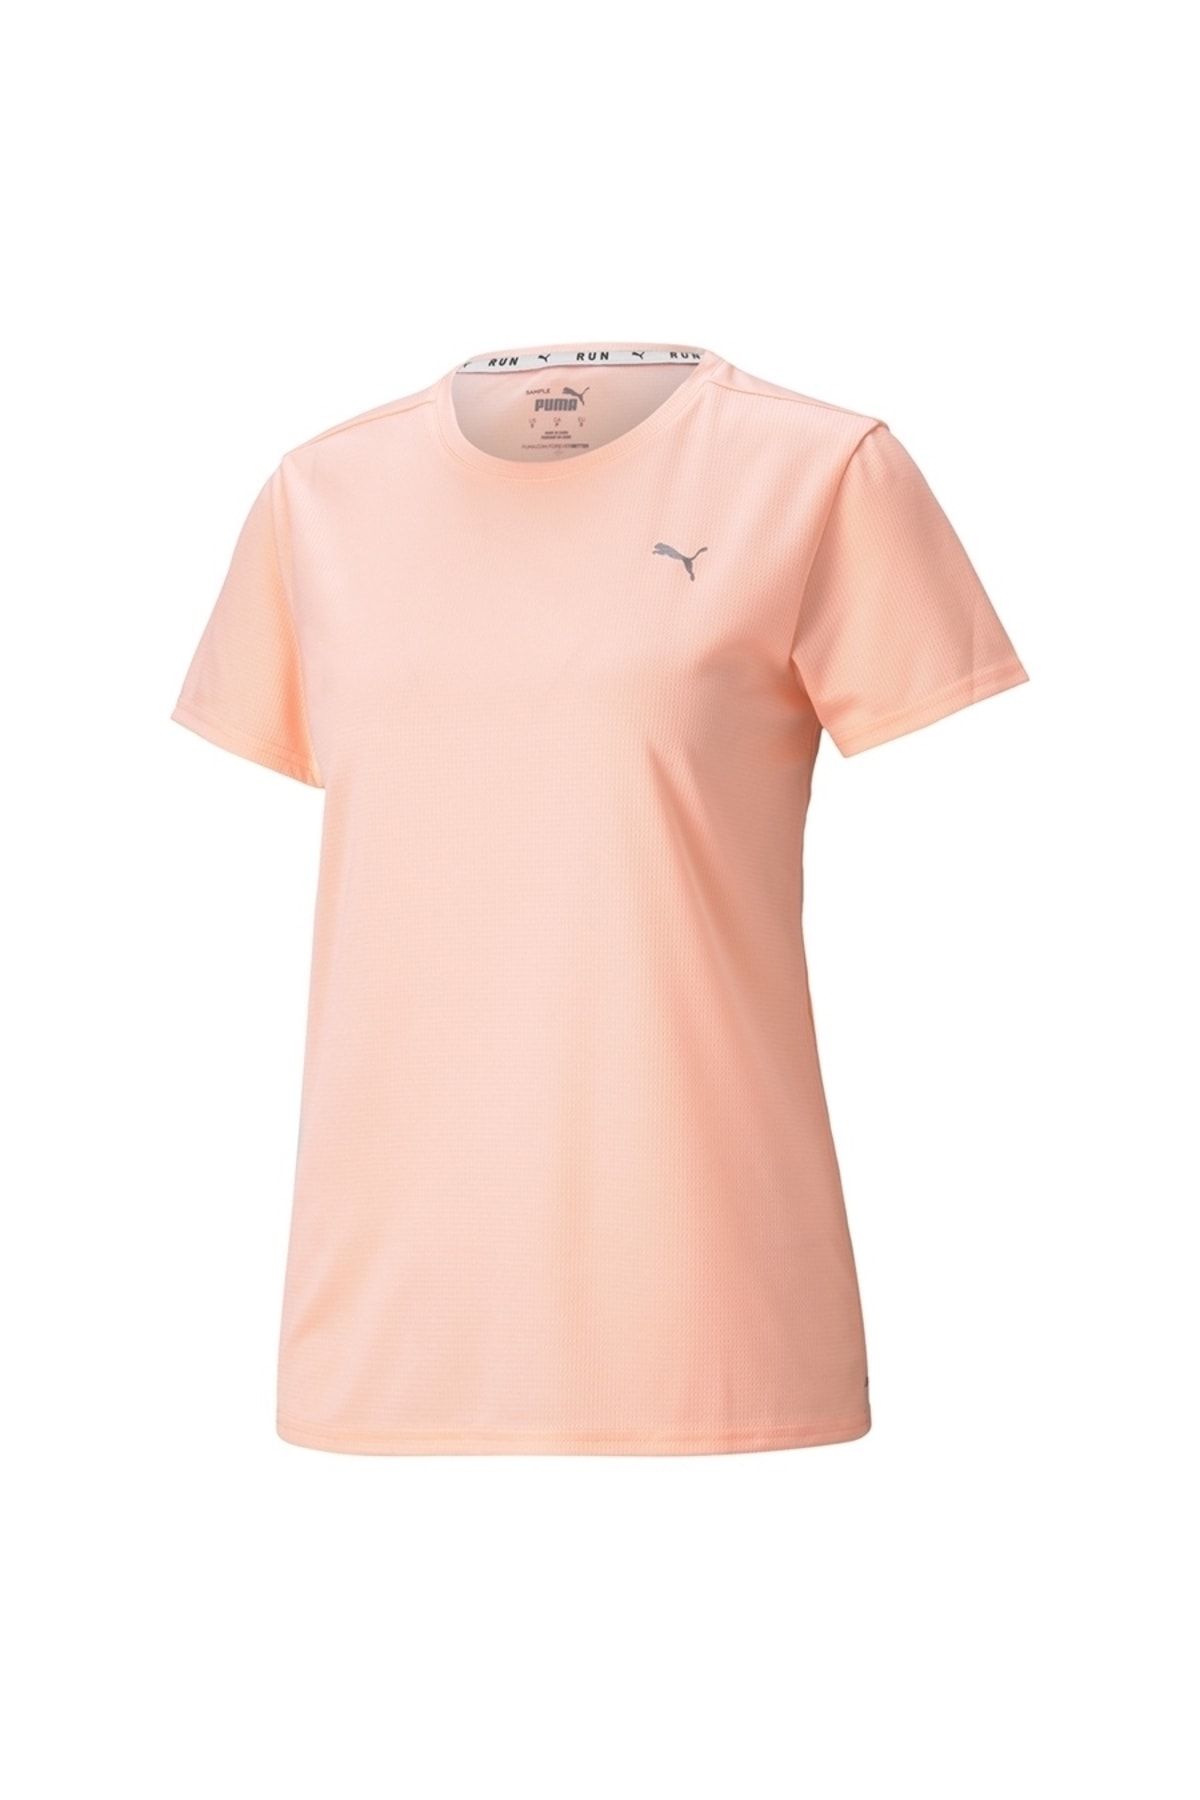 Puma Women's Favourite Short Sleeve Running T-Shirt Elektro Peach